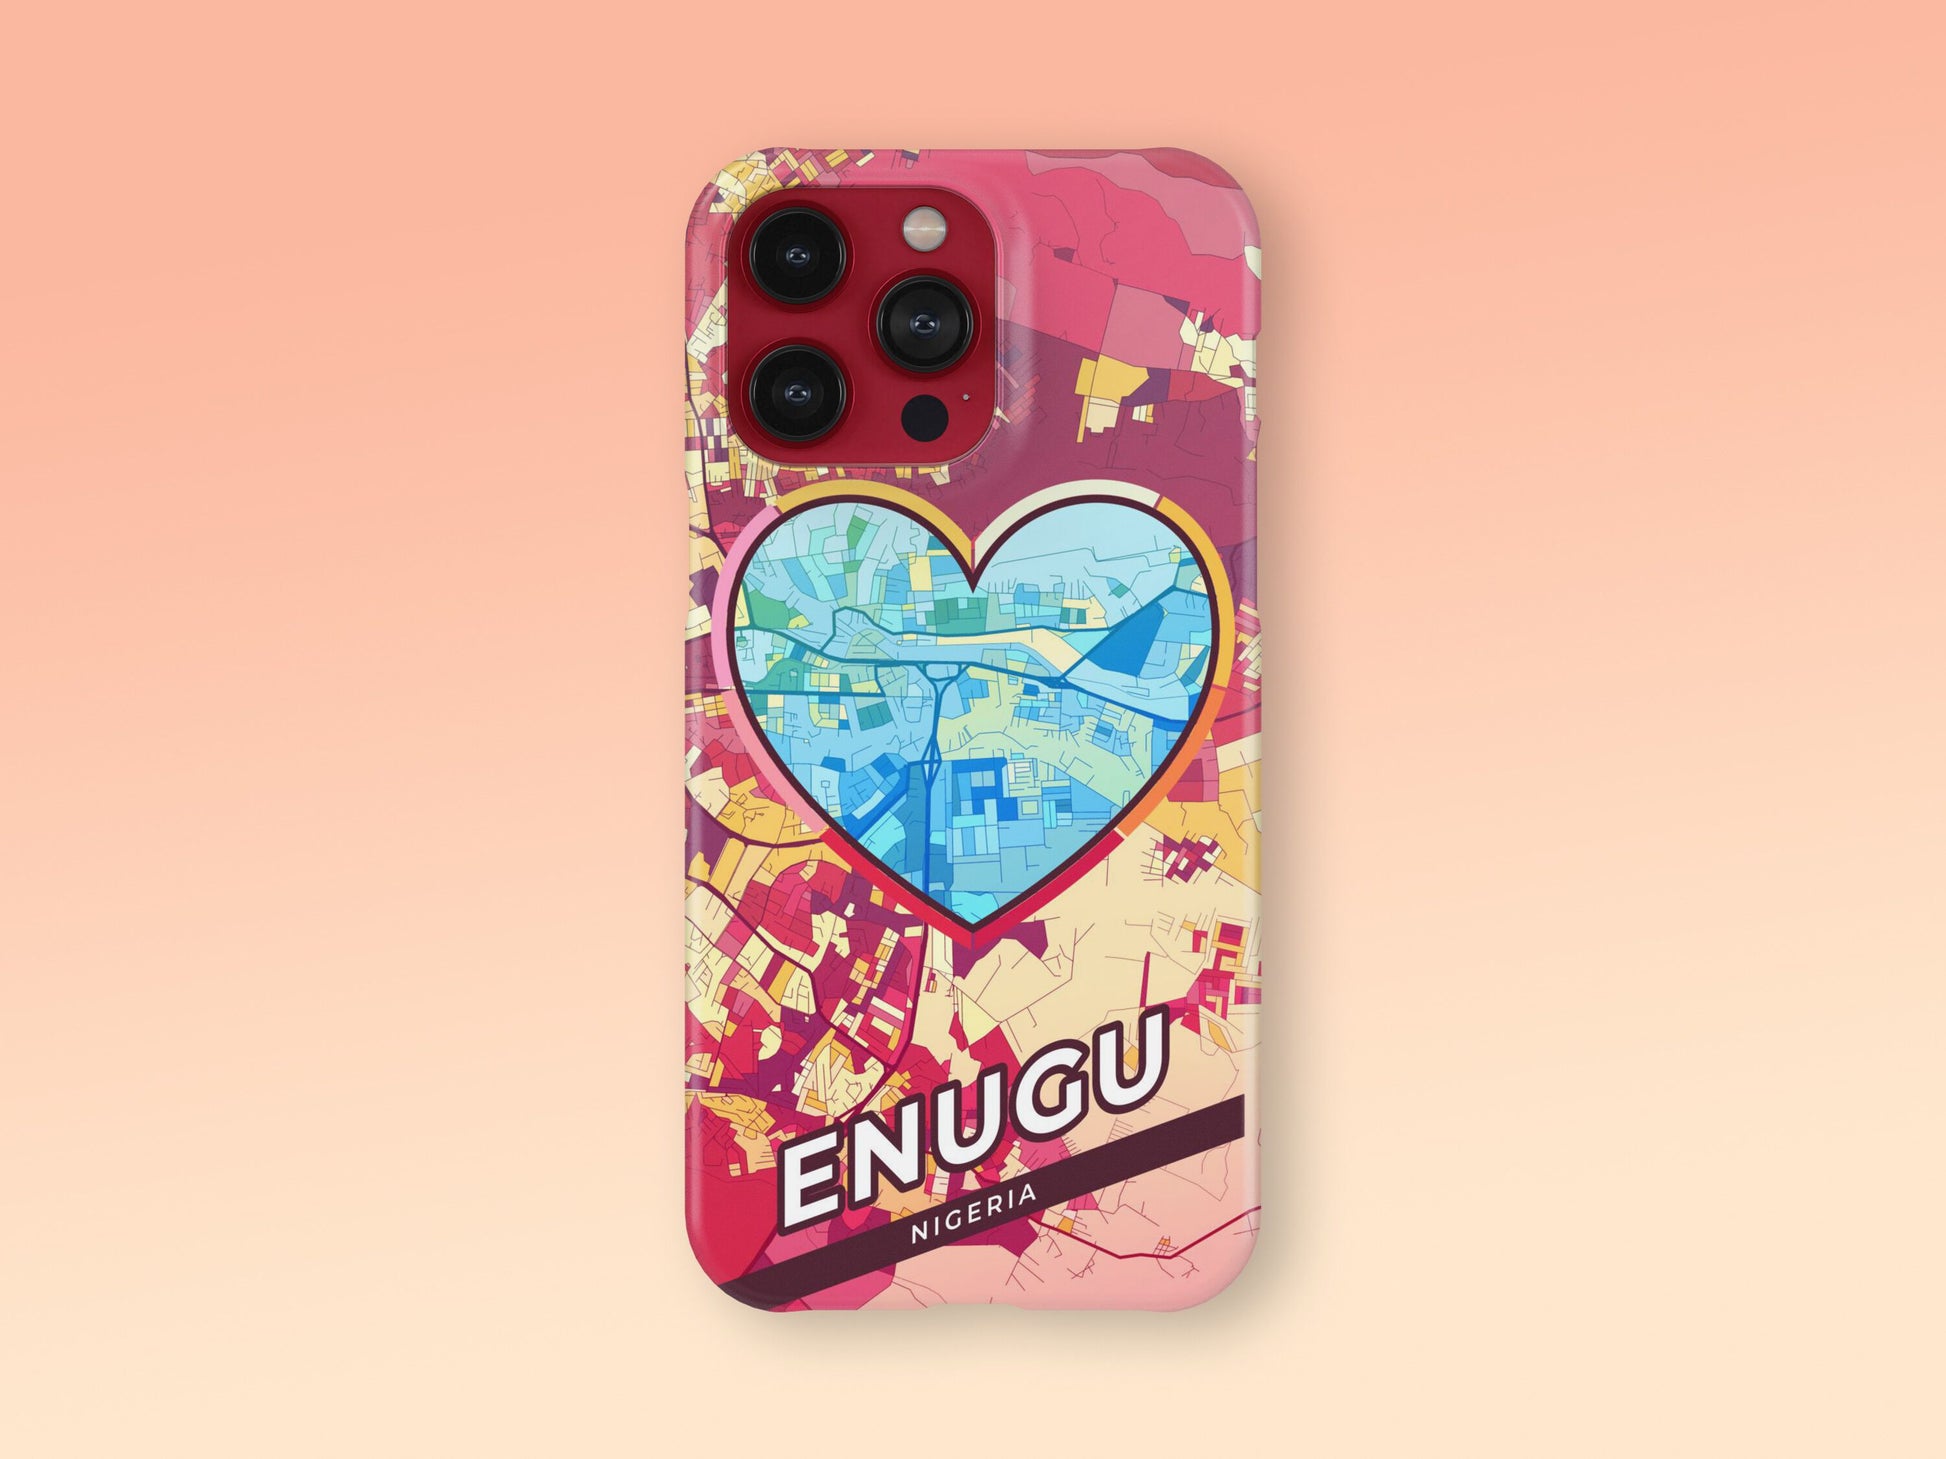 Enugu Nigeria slim phone case with colorful icon. Birthday, wedding or housewarming gift. Couple match cases. 2